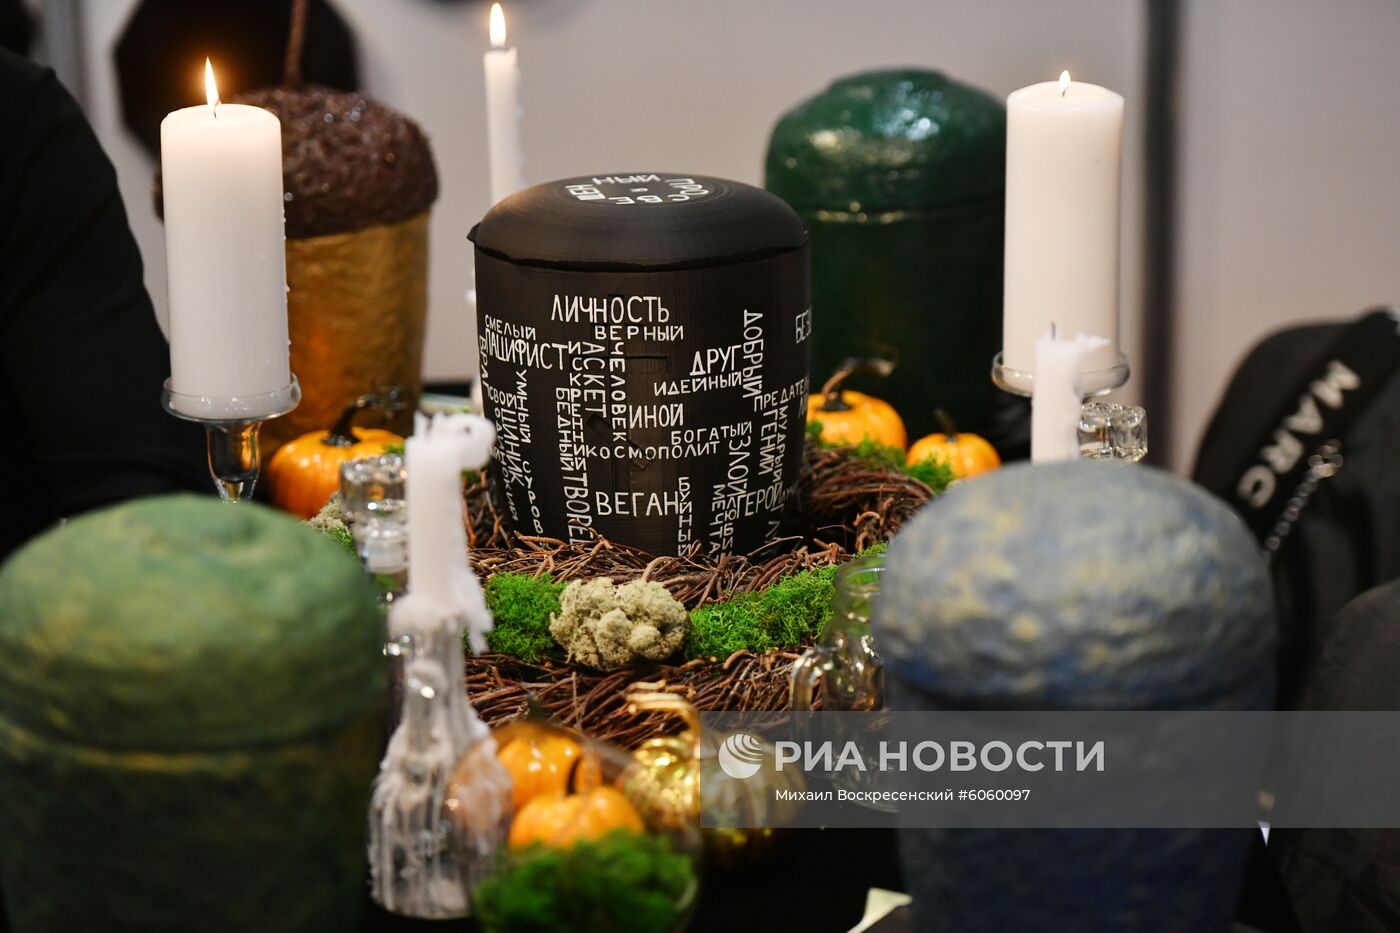 27-ая Международная выставка "Некрополь - Tanexpo 2019"